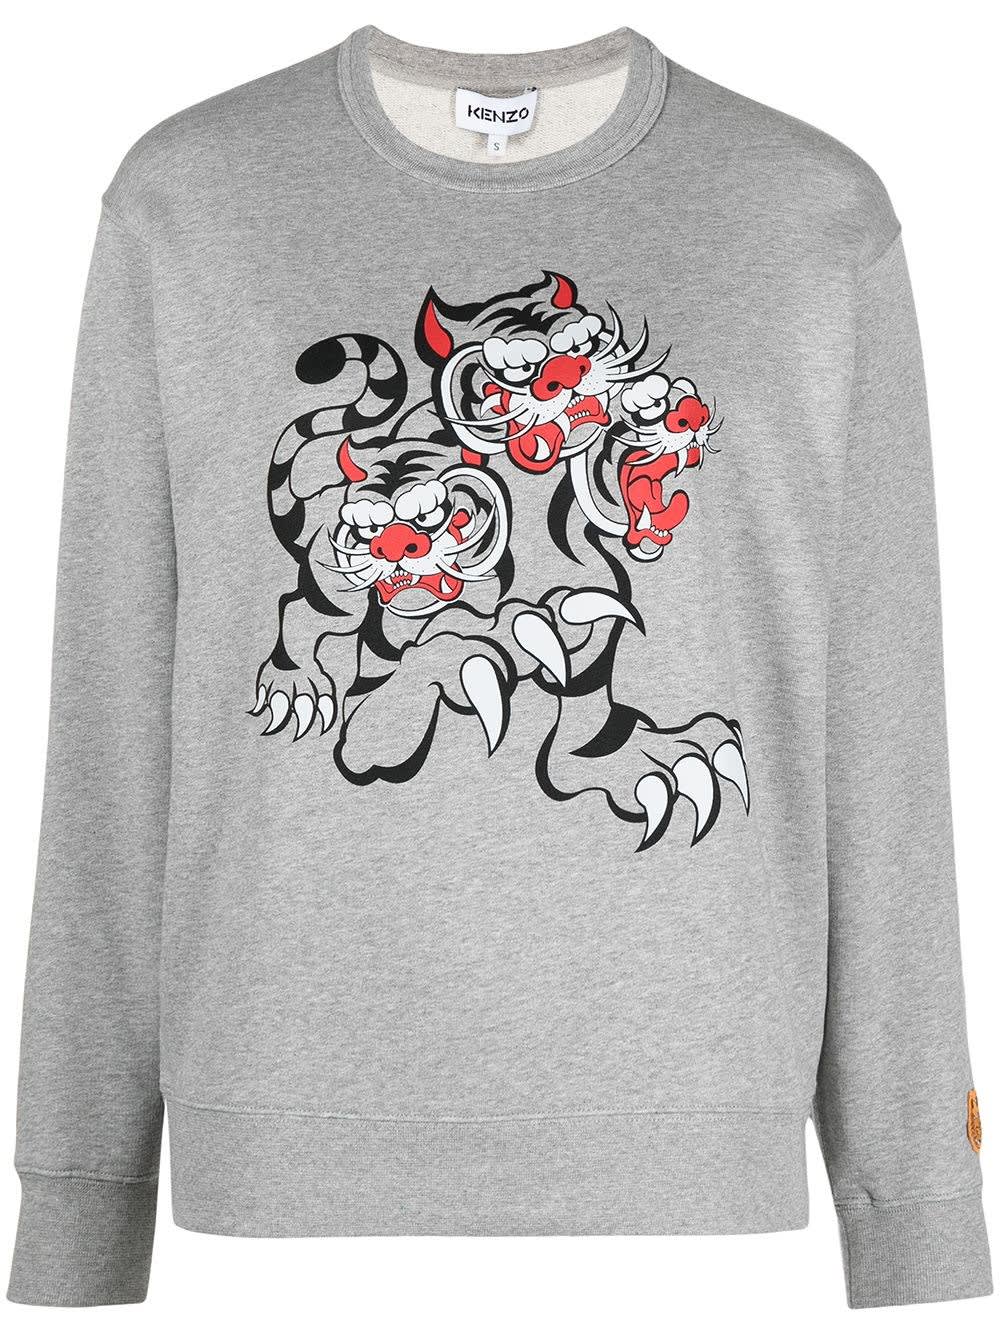 Kenzo Cotton Sweatshirt With Graphic Print